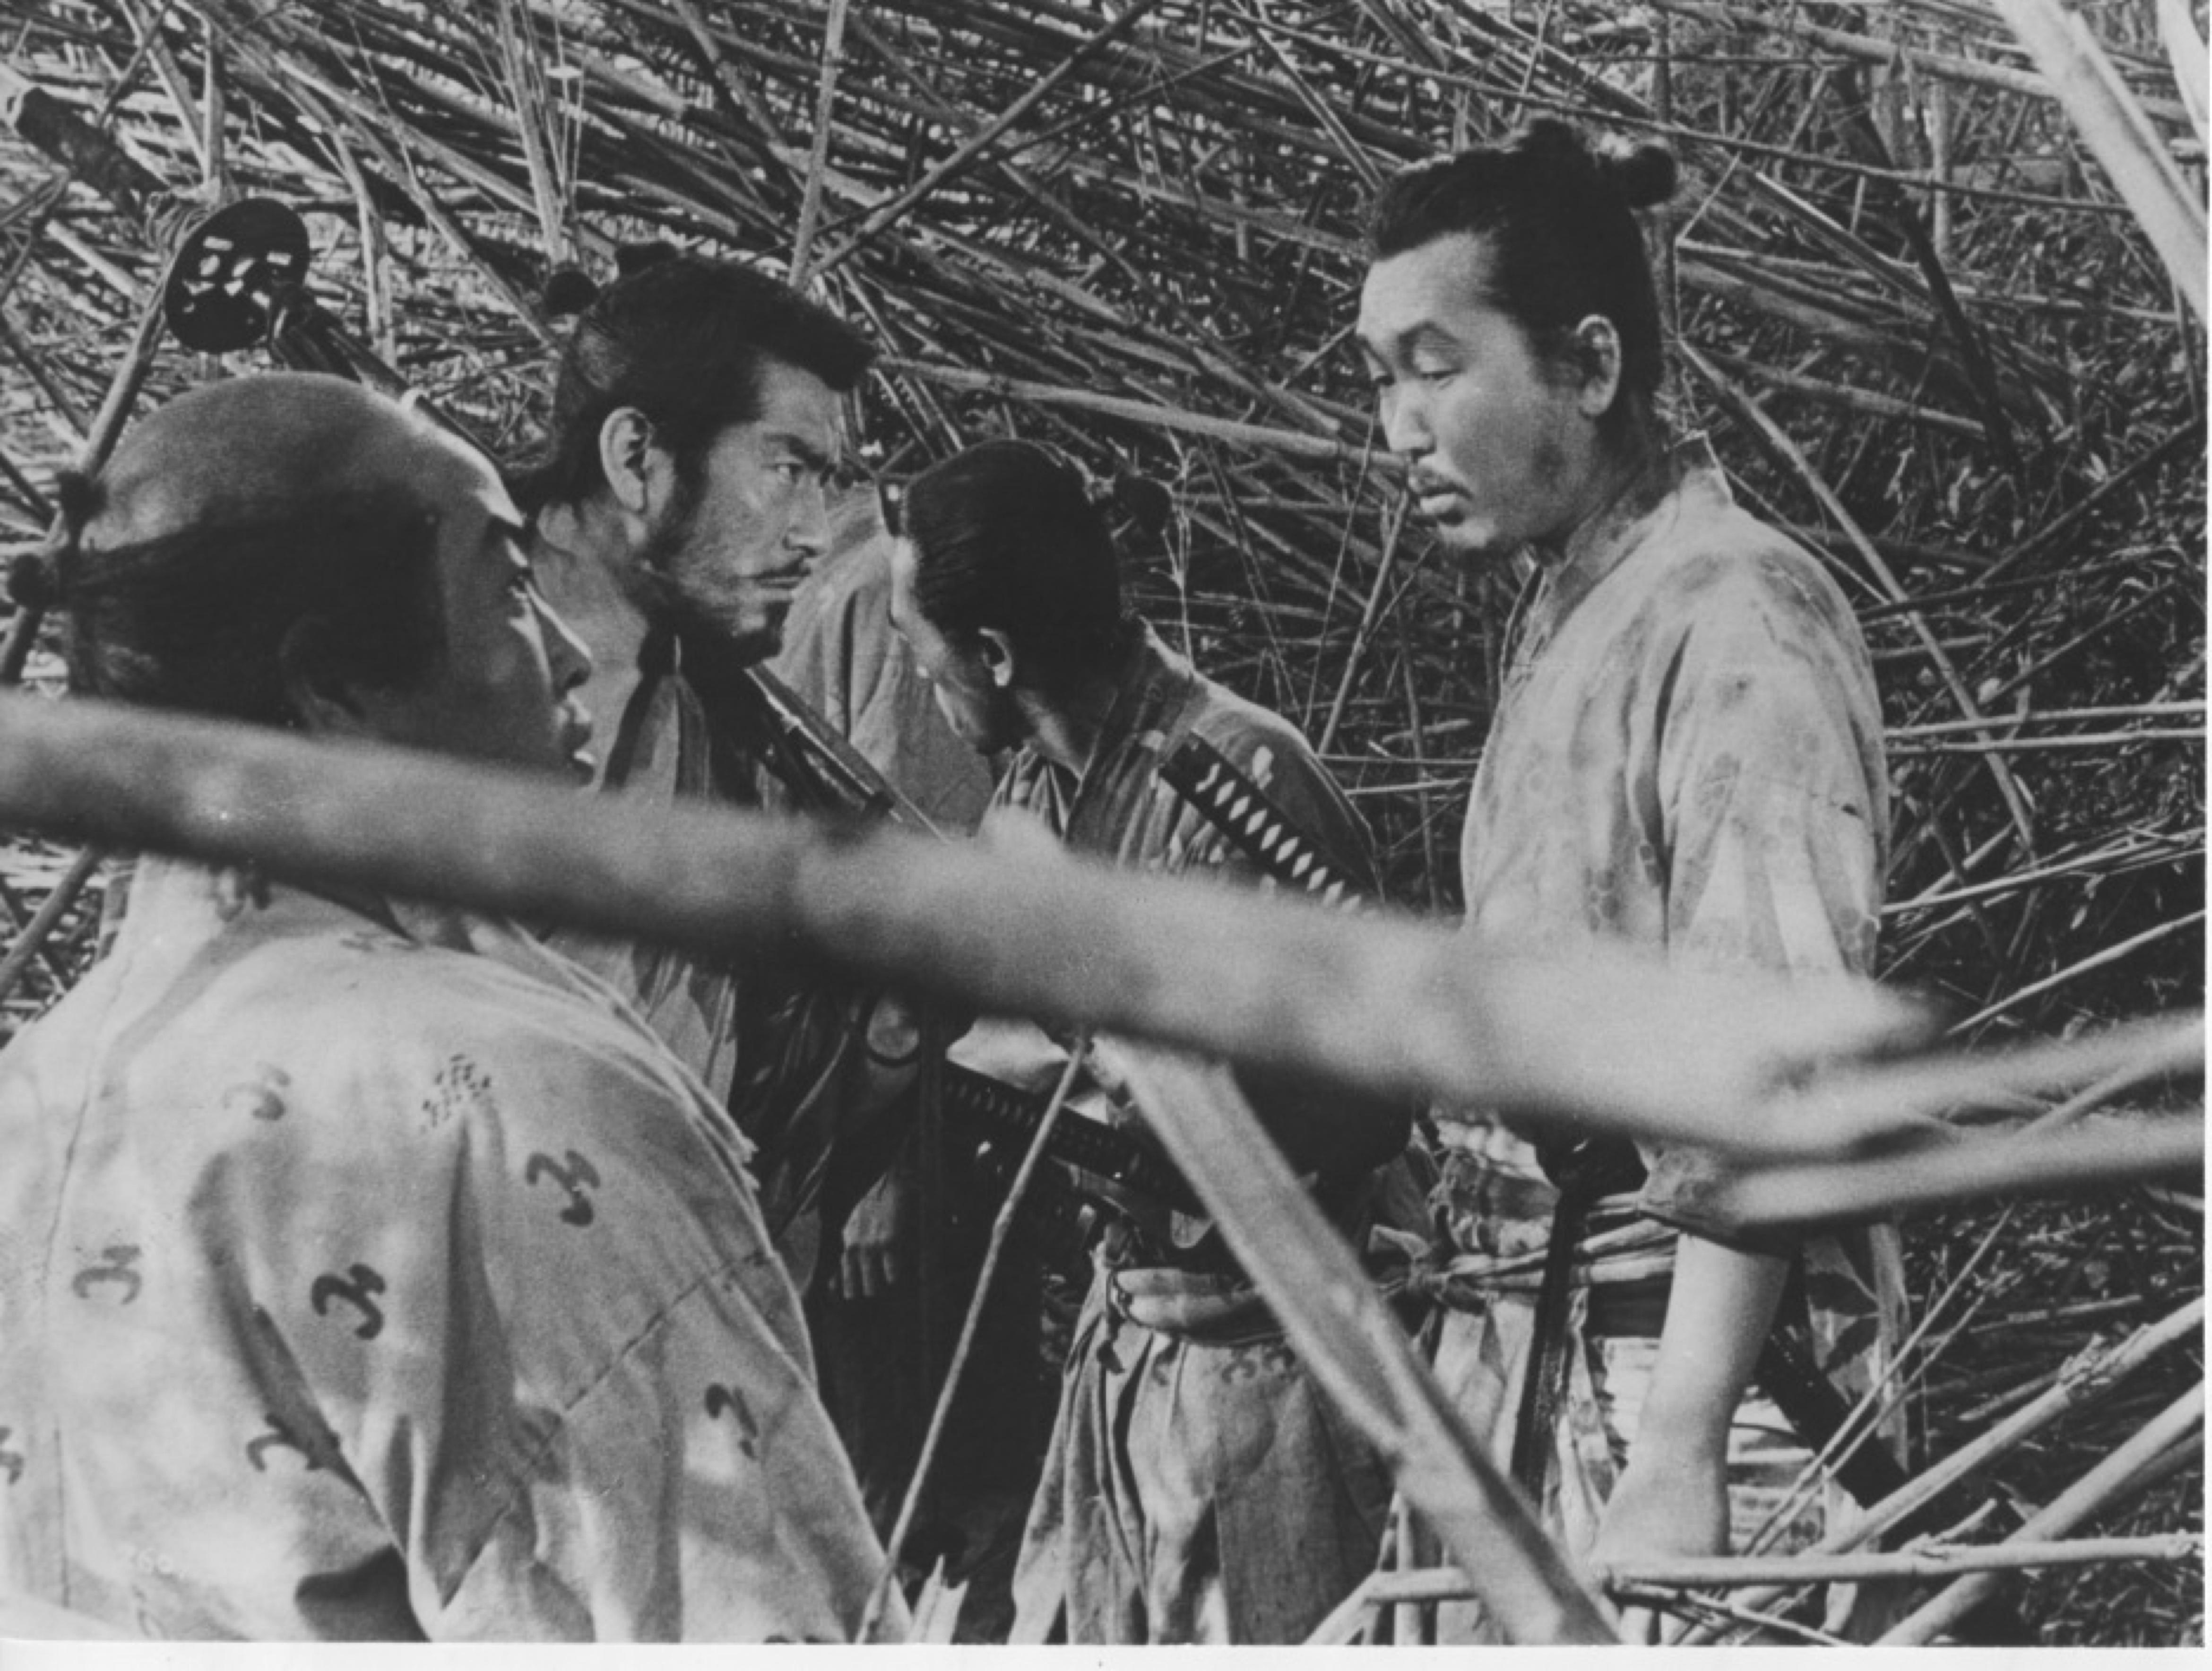 Unknown Portrait Photograph - A Scene from the Movie The Seven Samurai - Vintage Photo - 1950s